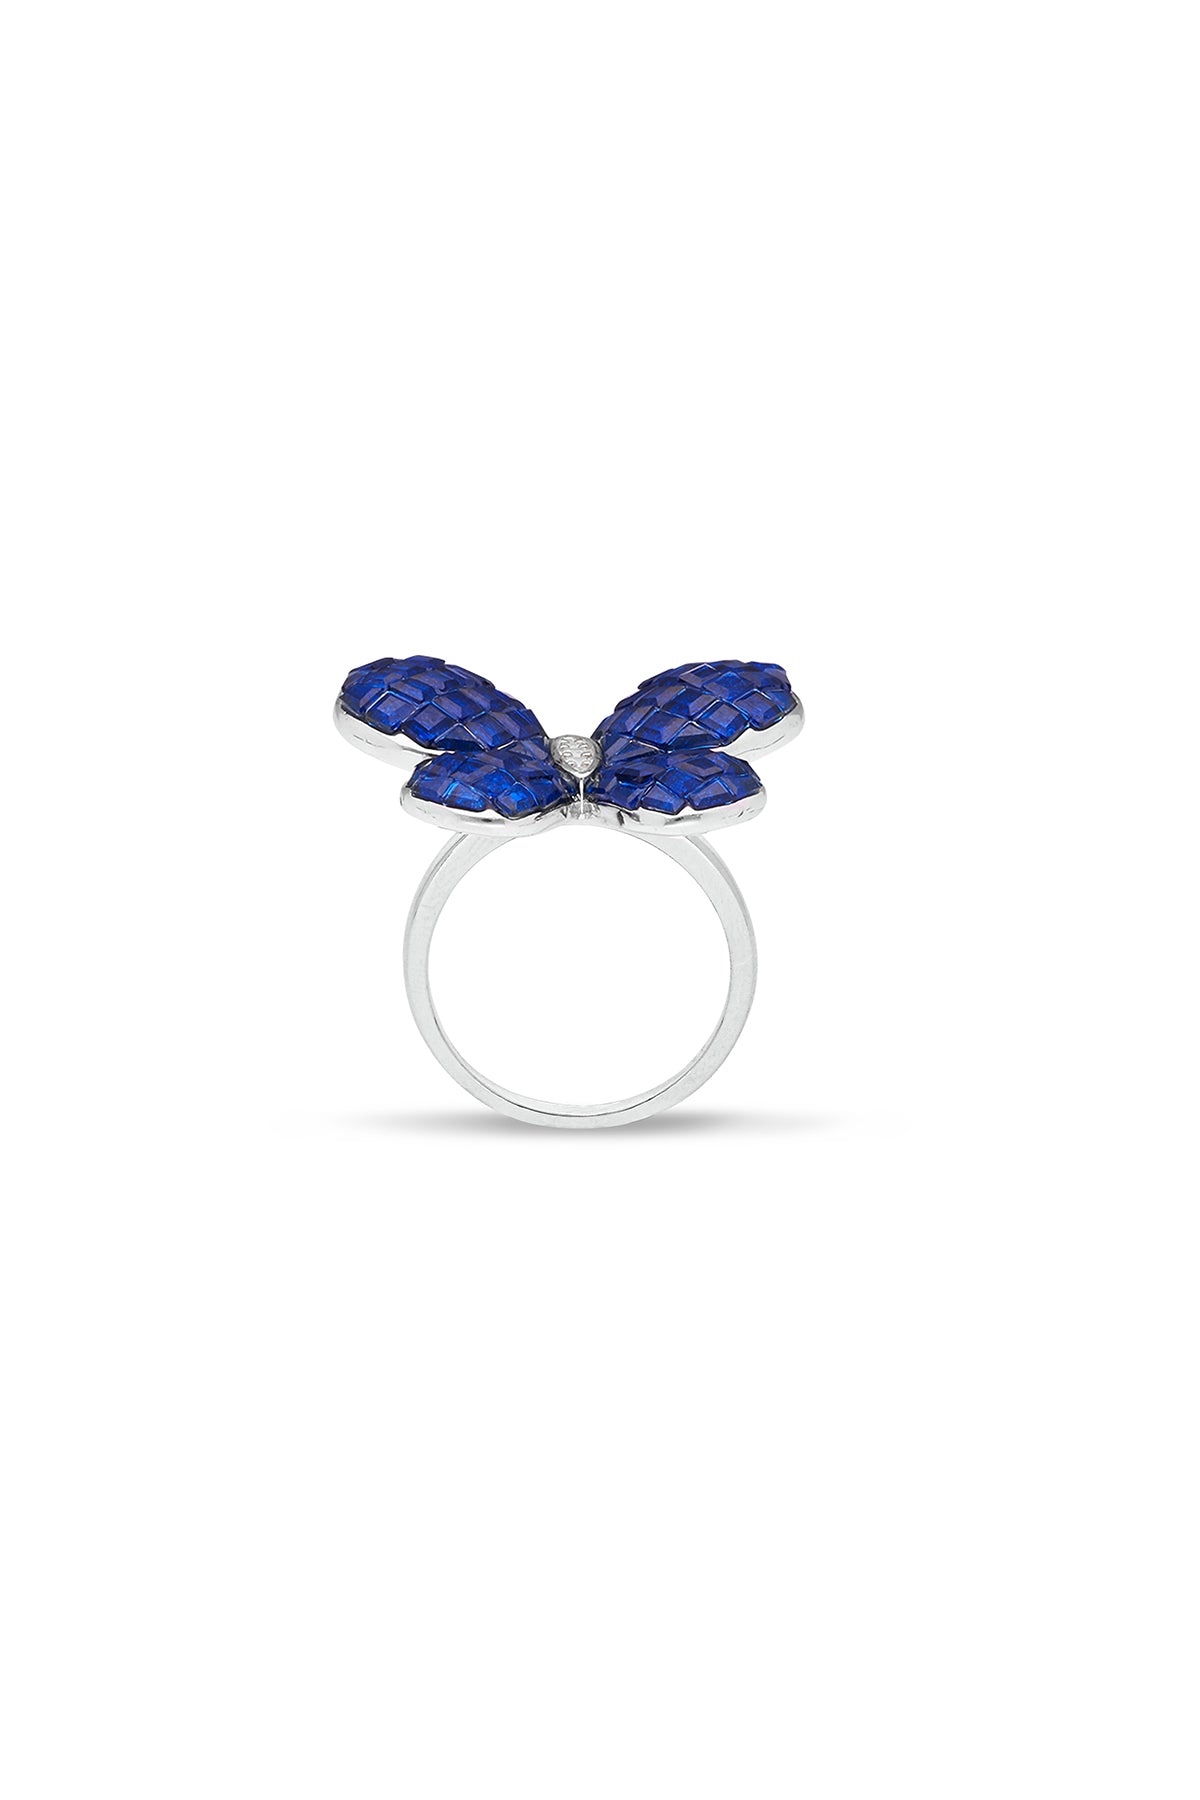 Fluttering Wings Blue Sapphire Ring